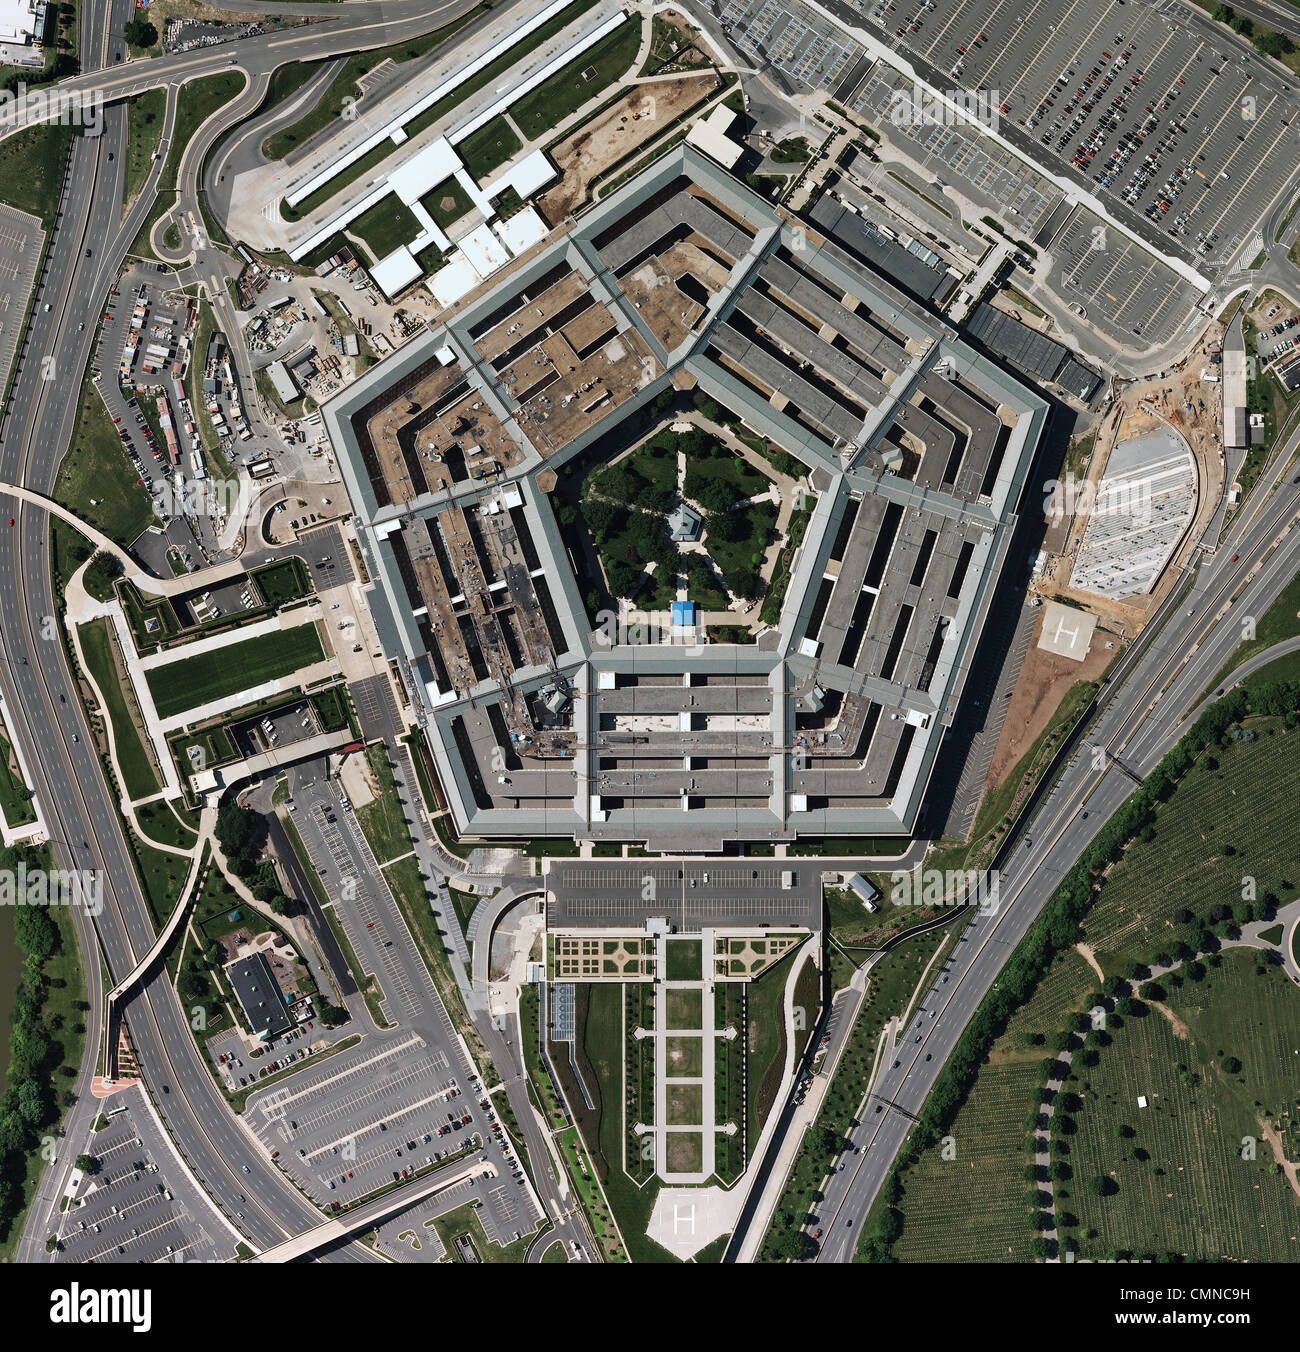 The Pentagon Building